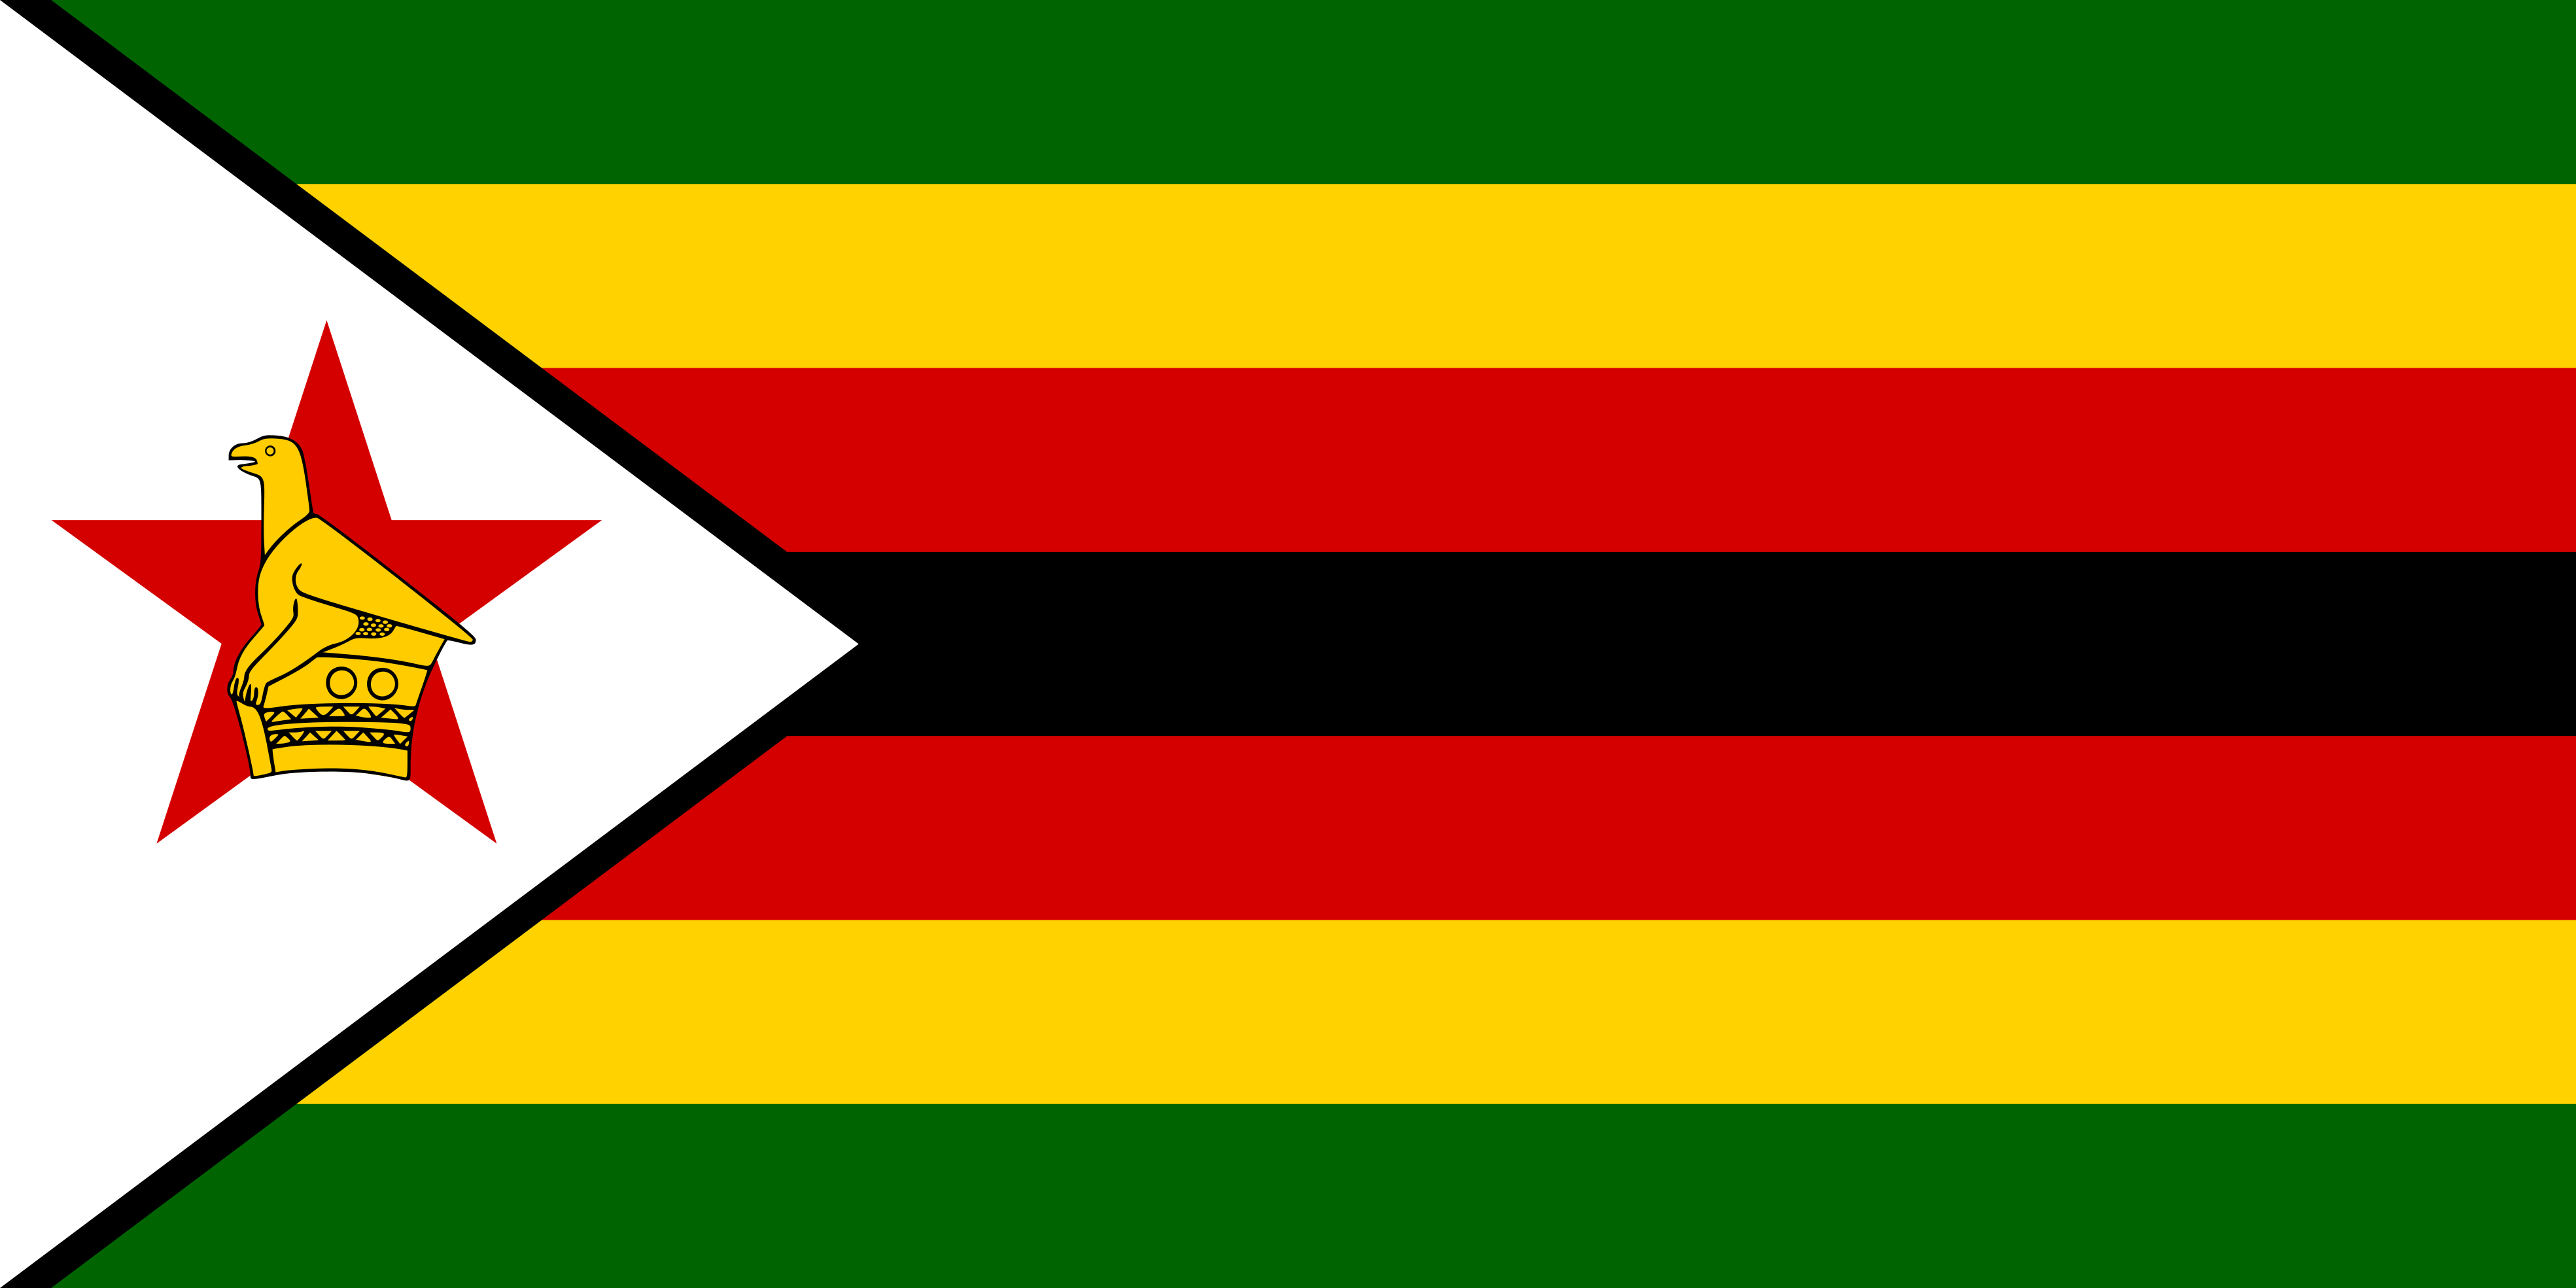 Zimbabwe Flag Image - Free Download